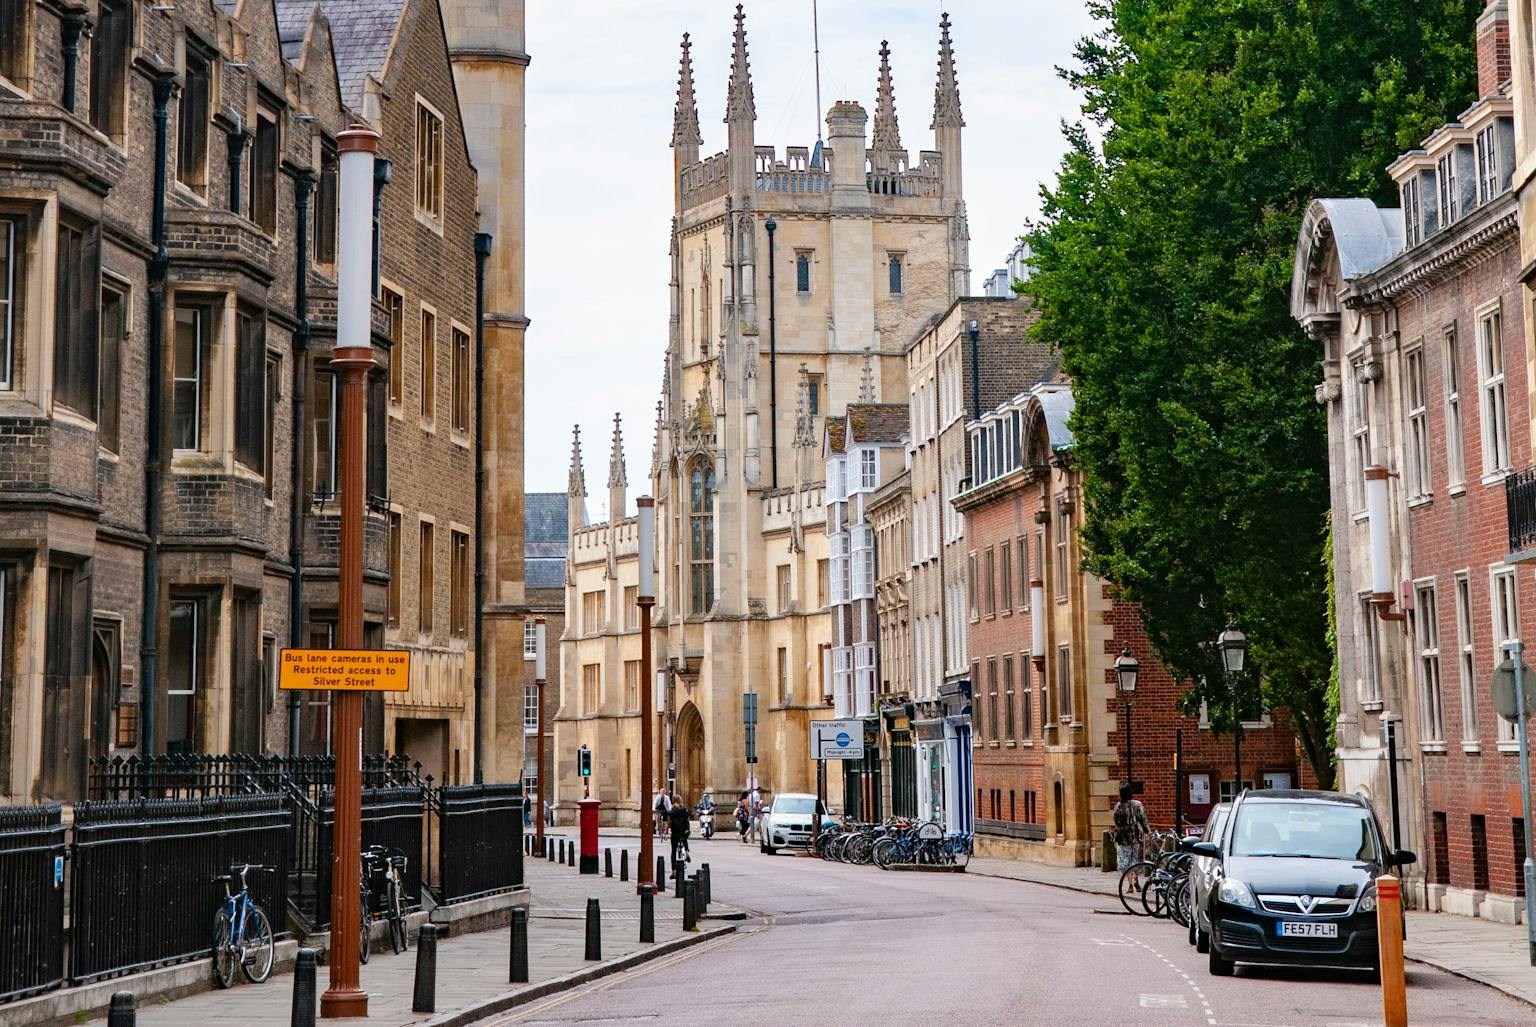 Cambridge urban street